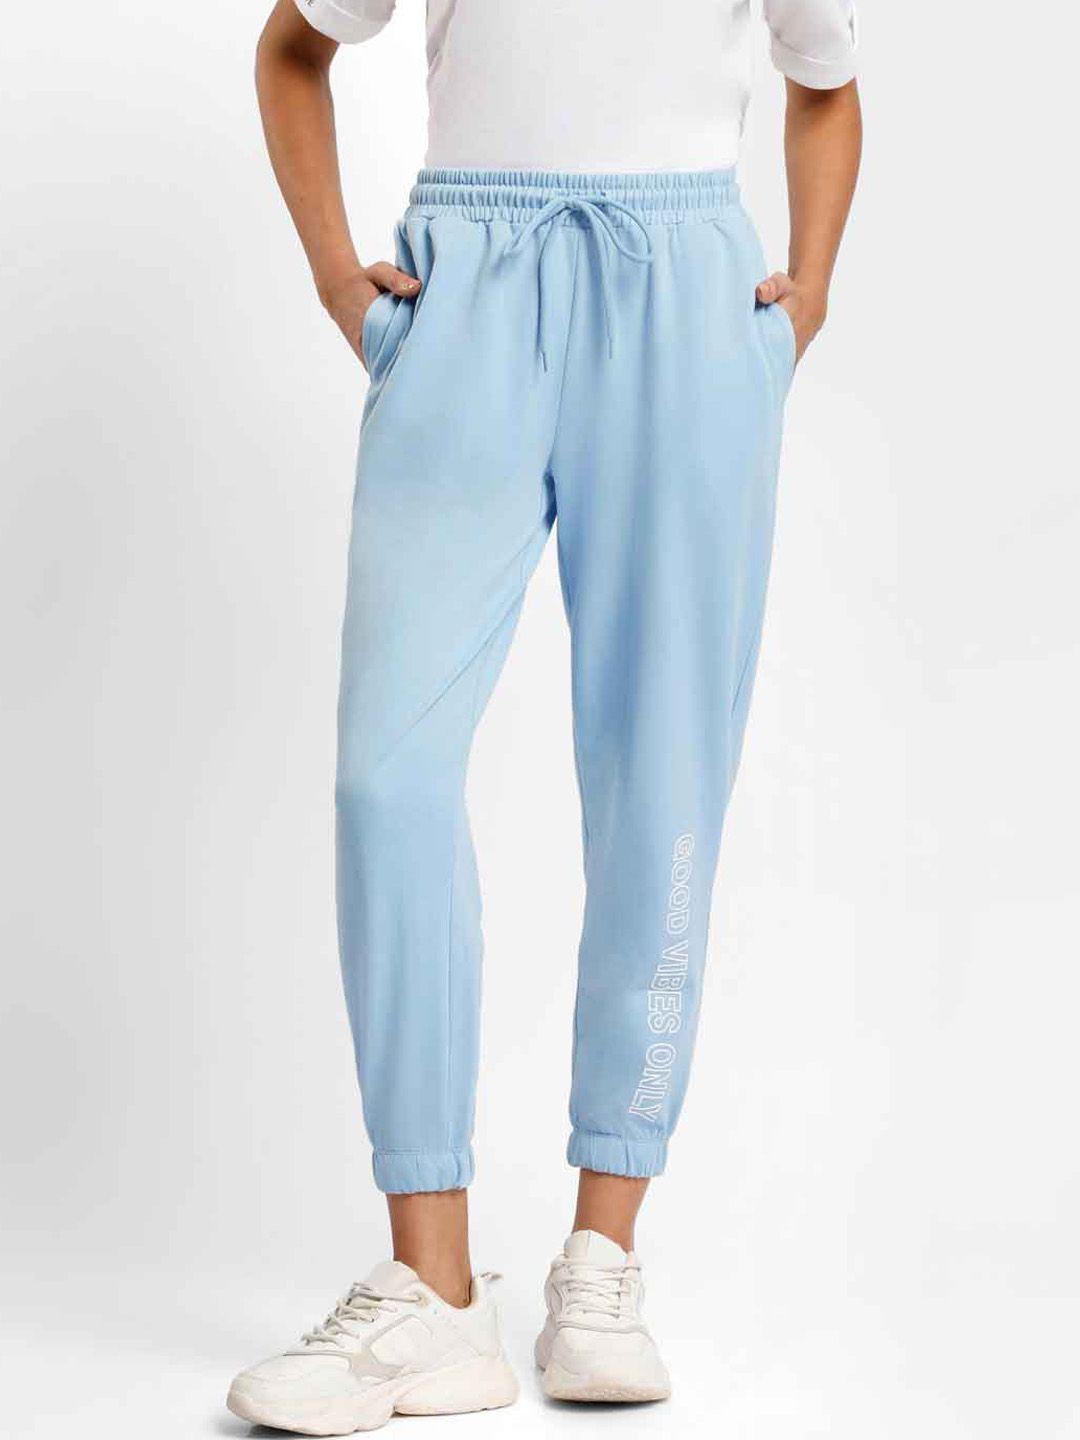 nobero women blue joggers trousers